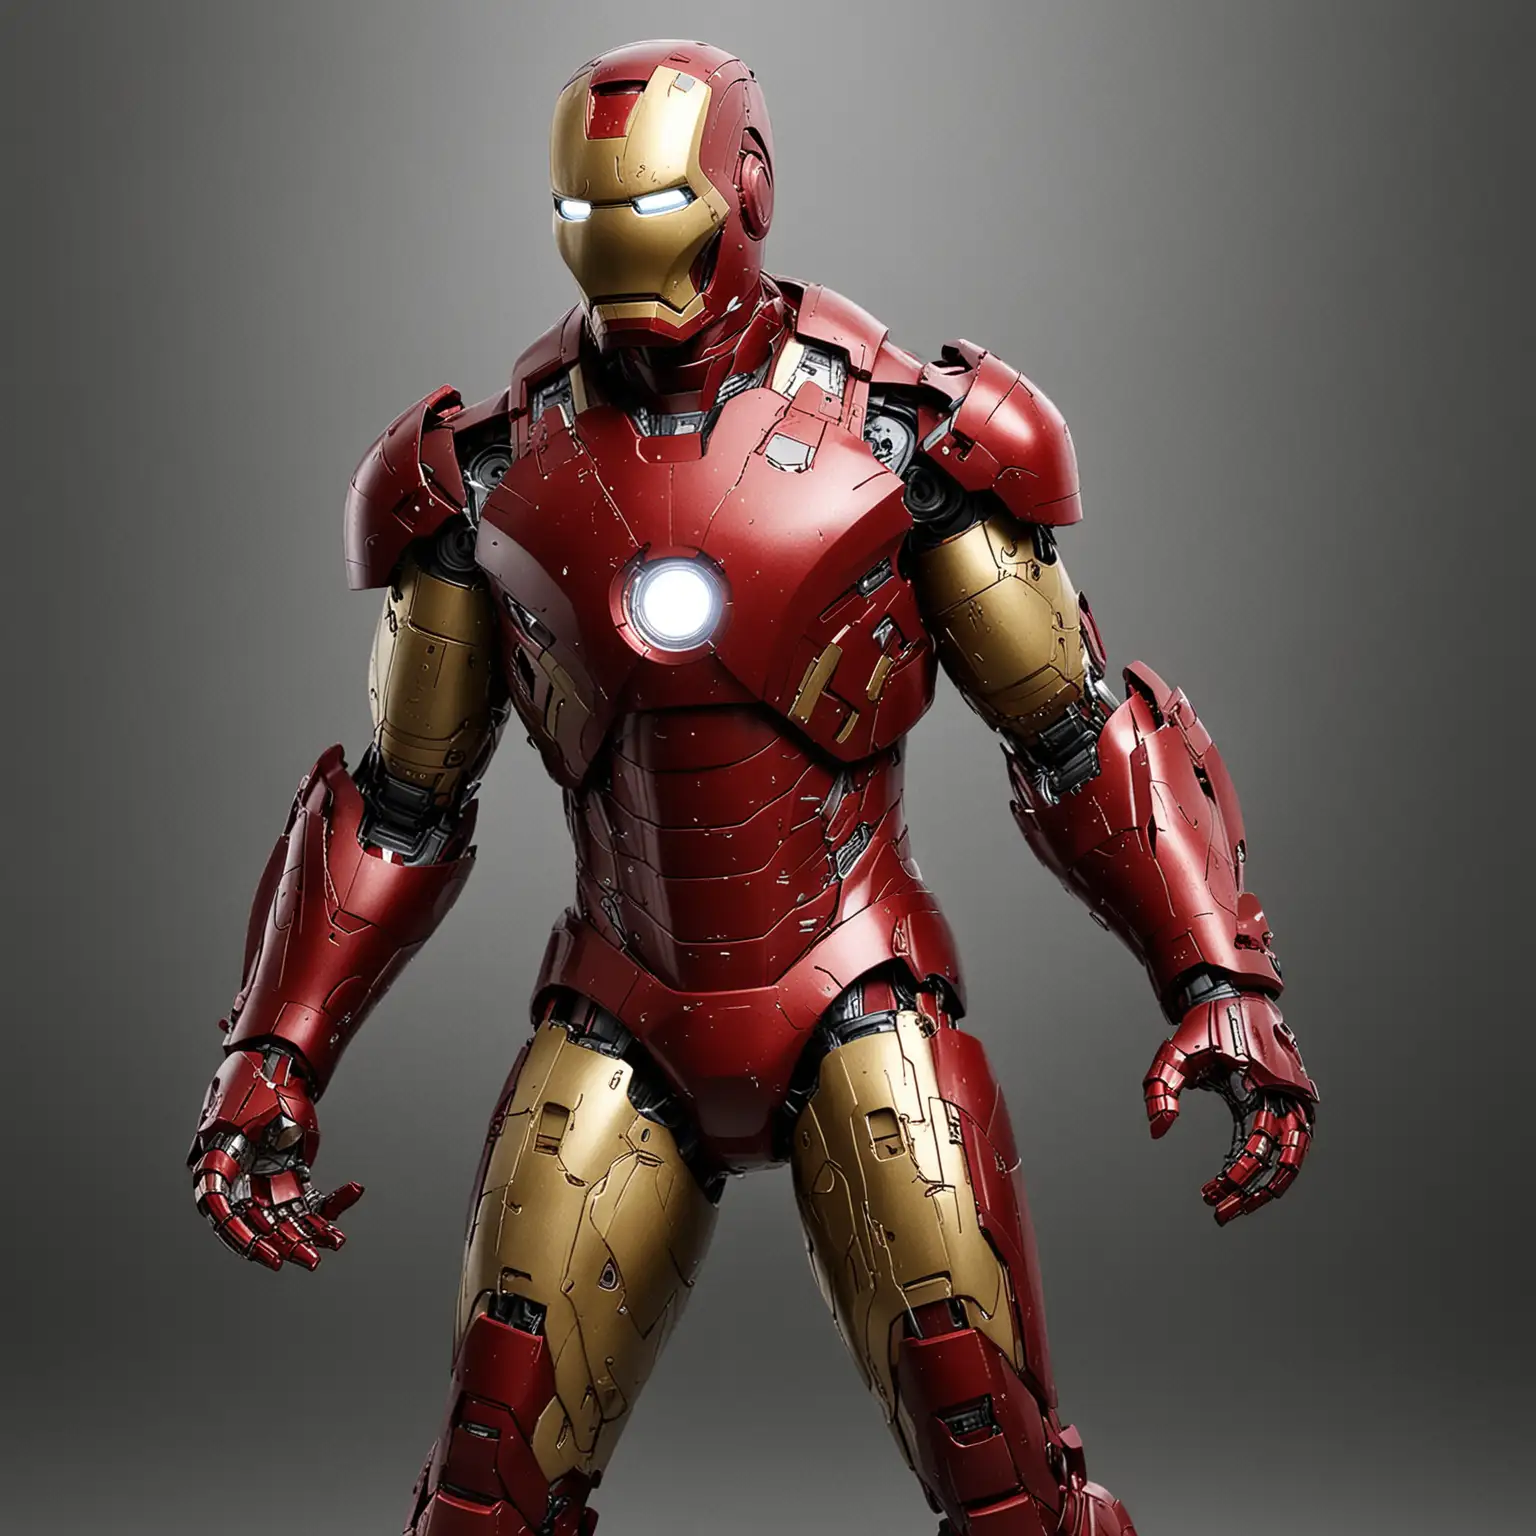 Futuristic Superhero Iron Man Suit Flying in Urban Night Sky